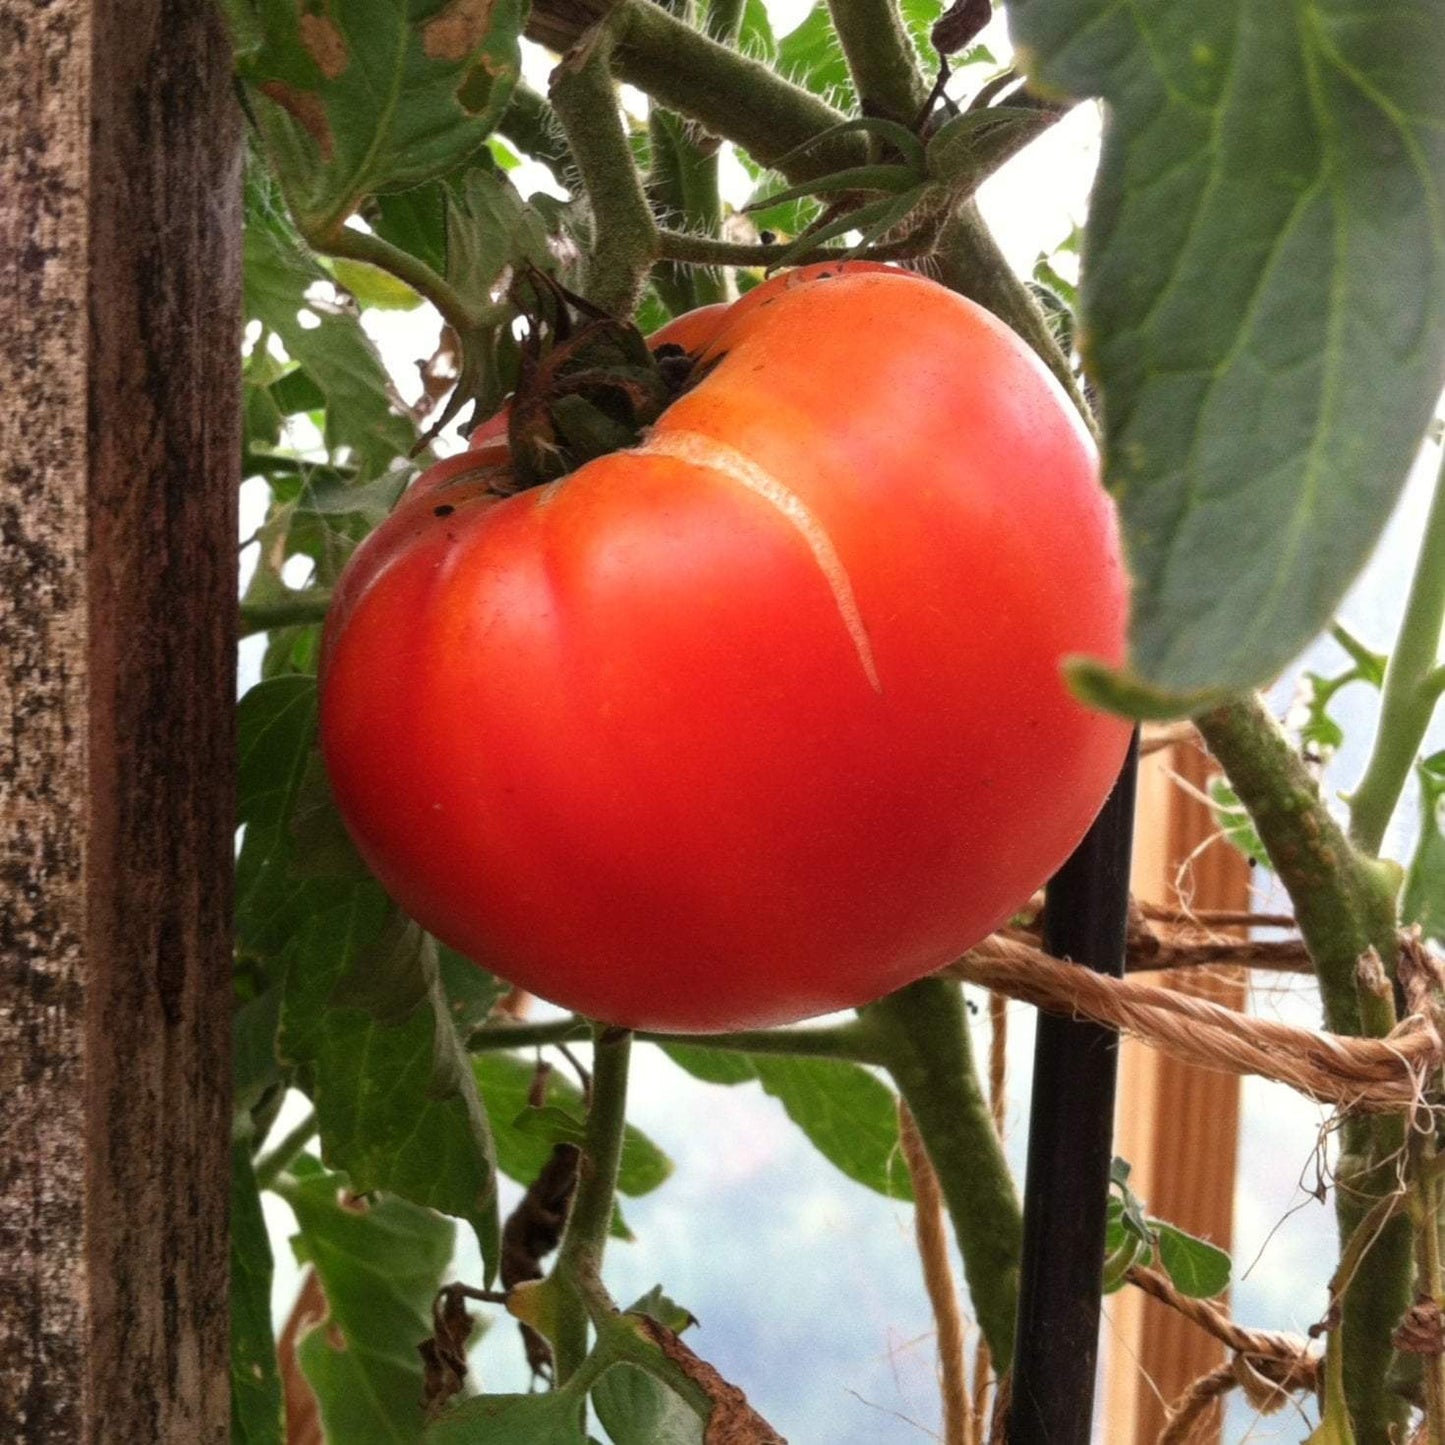 Slicing Tomato Seeds - Hillbilly, ORGANIC - Sow True Seed